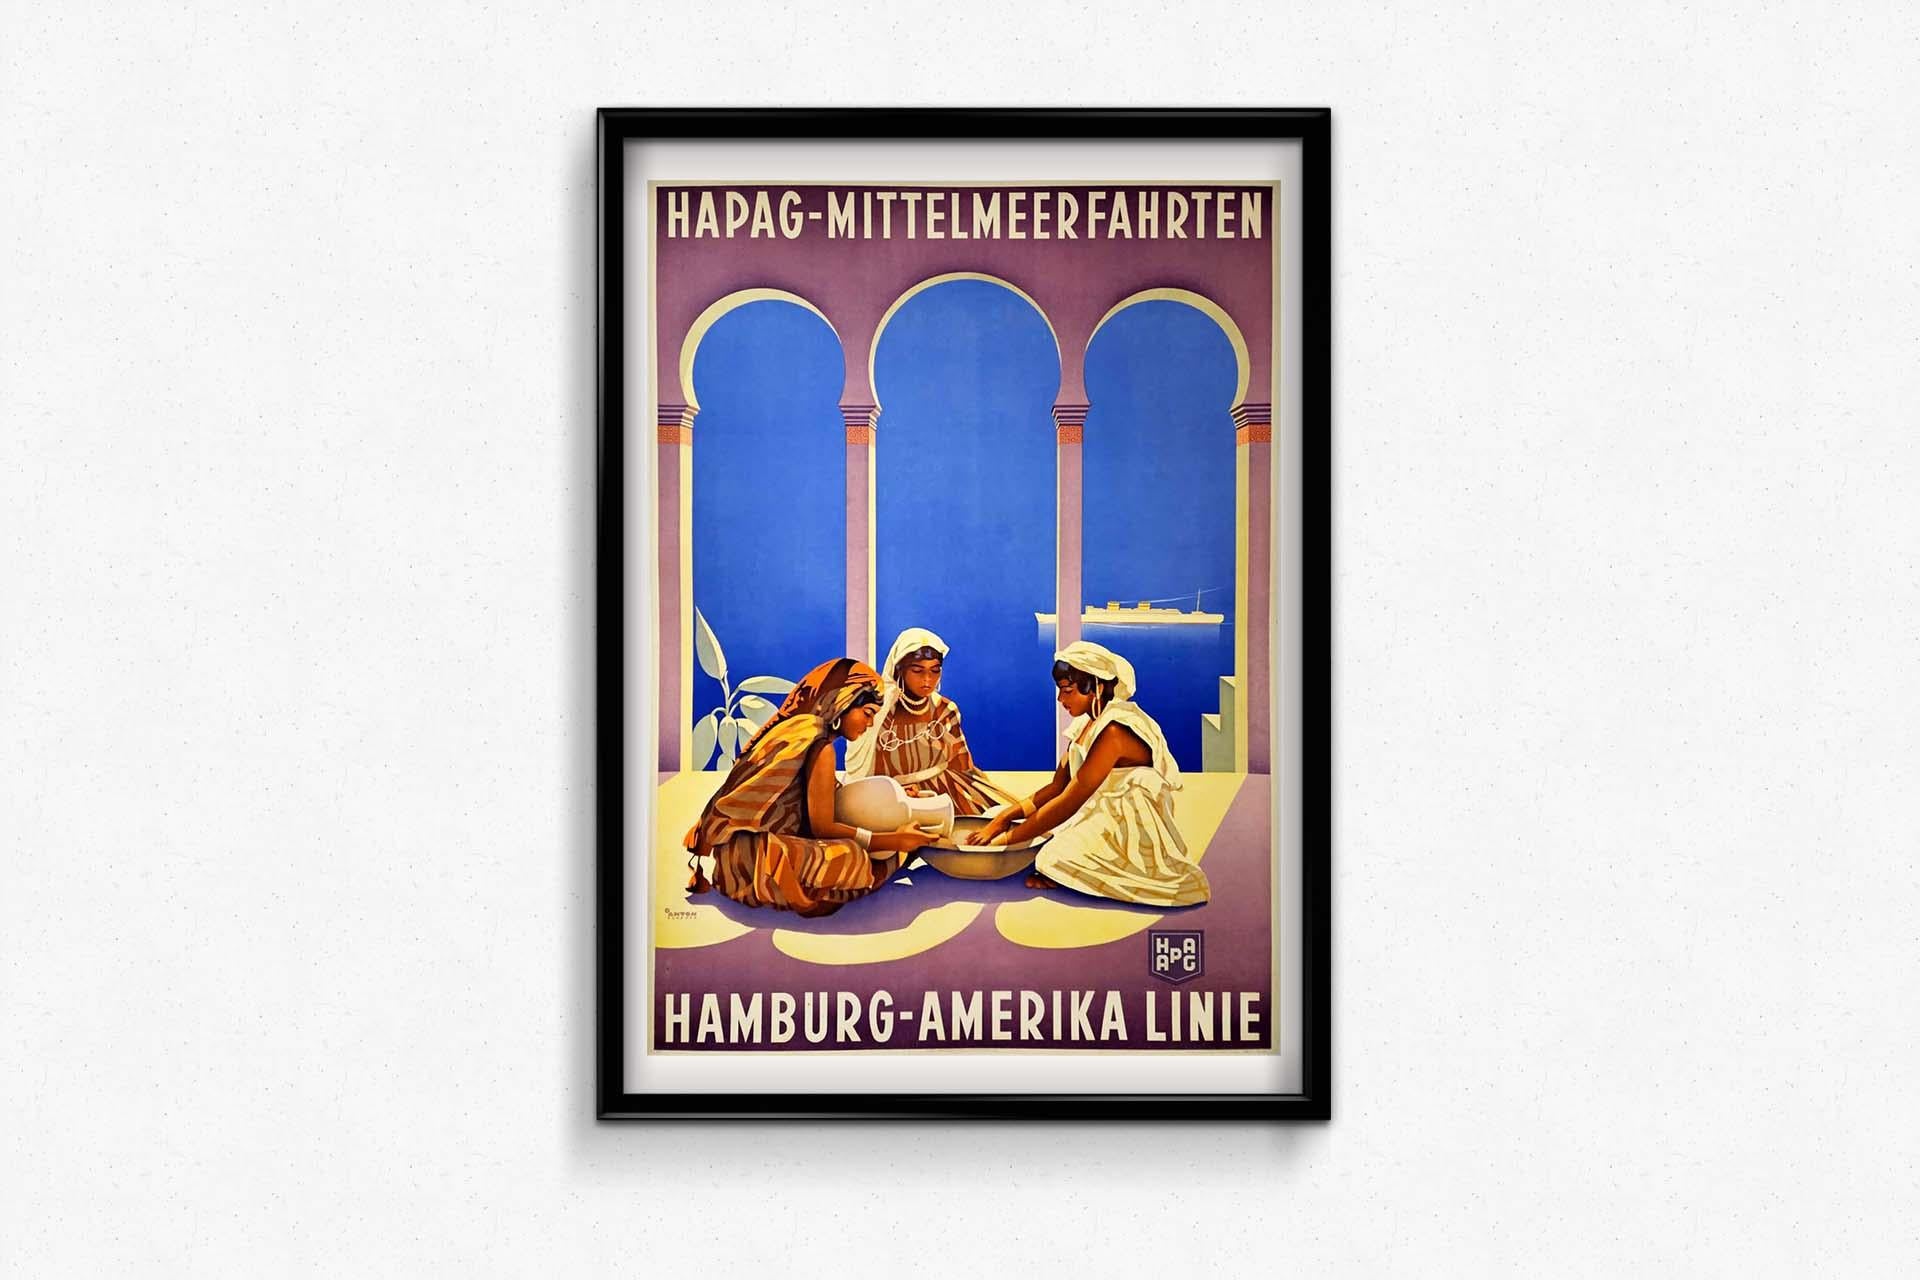 Original poster by Ottomar Anton Hapag Mittelmeerfahrten - Hamburg Amerika Line For Sale 2